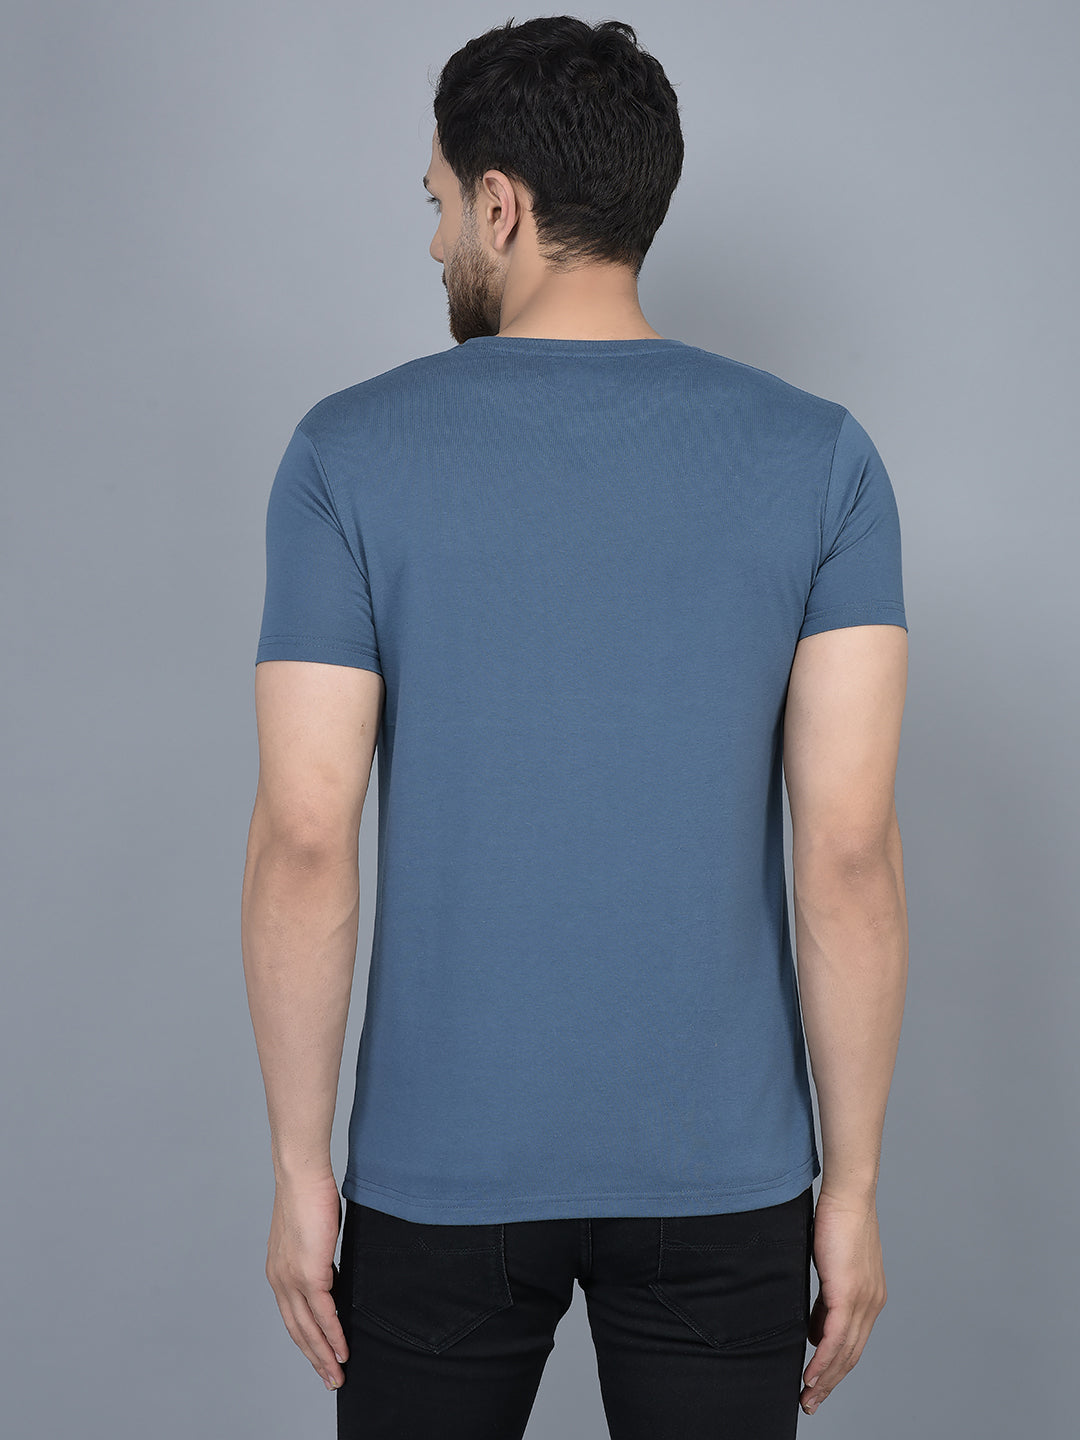 Cobb Denim Blue Printed Round Neck T-Shirt